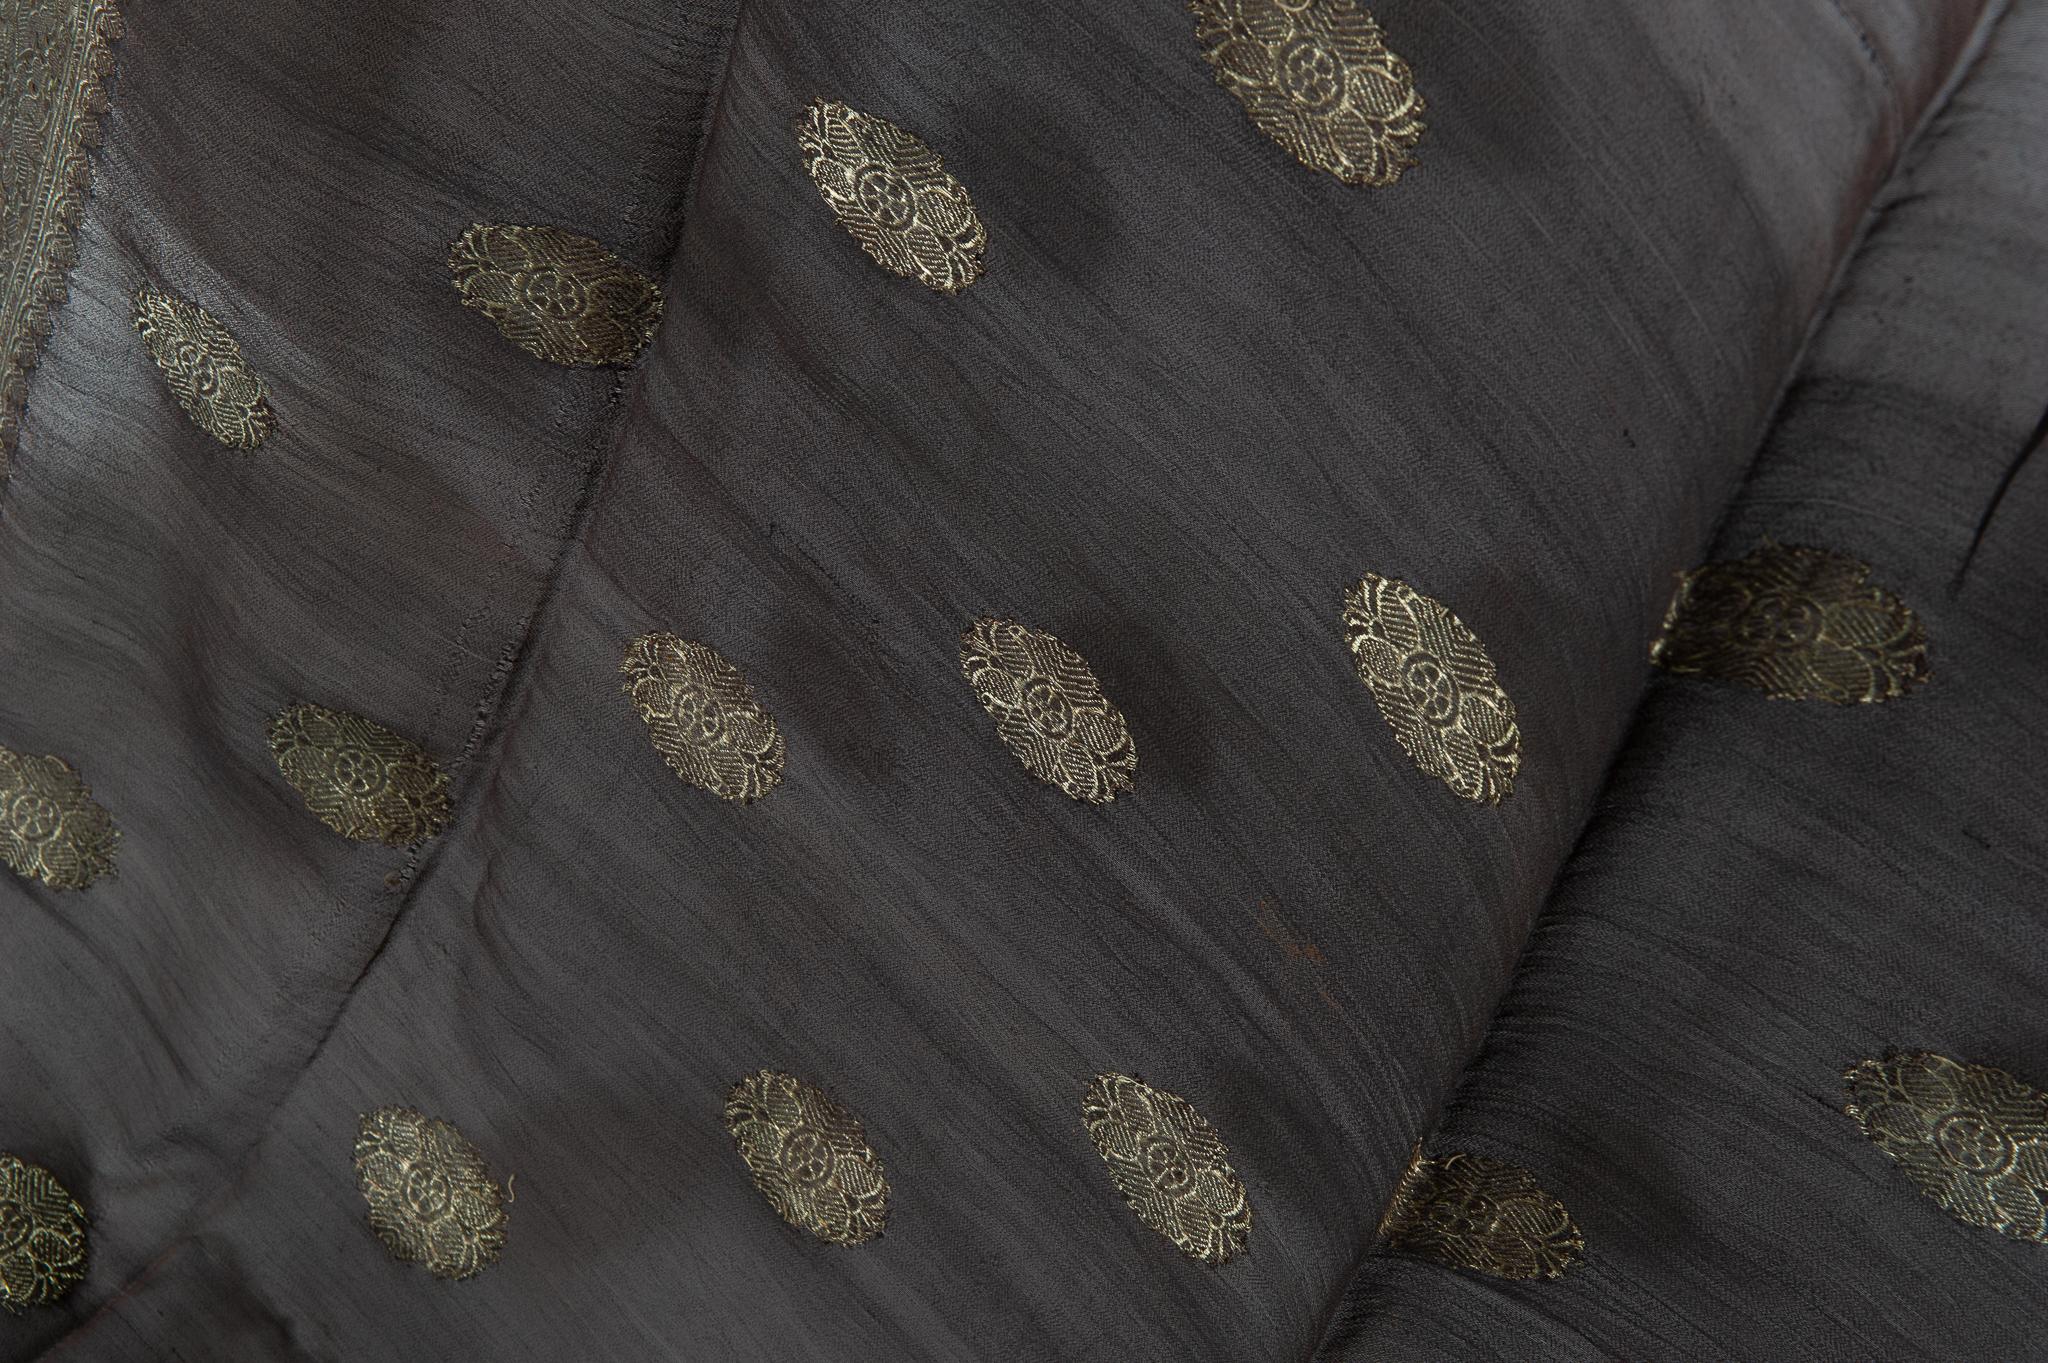 Vintage Indian Sari Dark Brown Color, Unusual Curtains or an Evening Dress 3